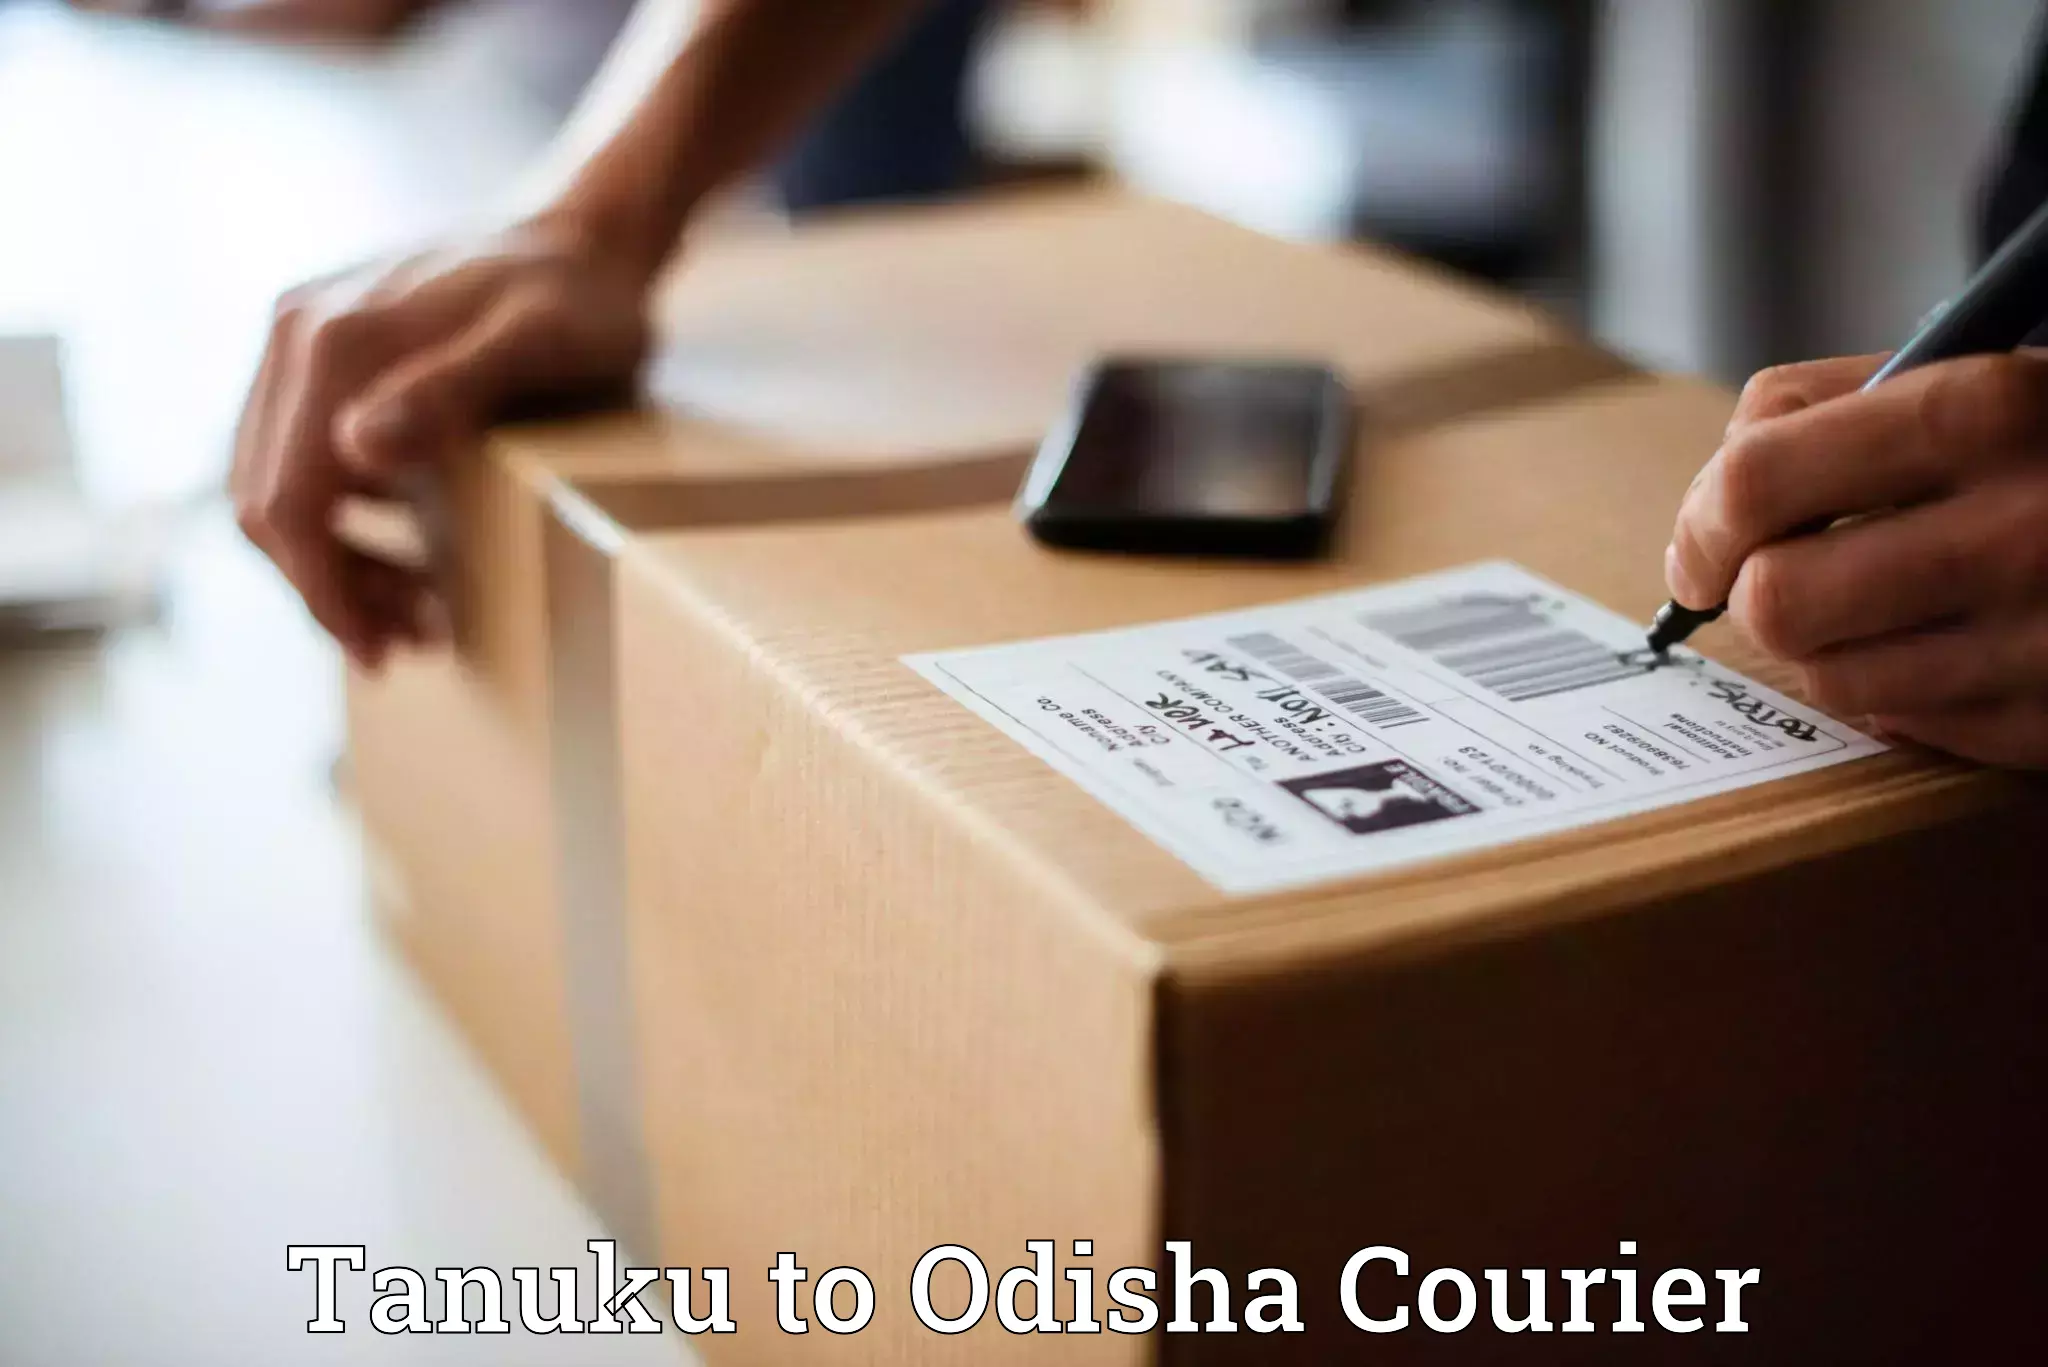 Courier service comparison Tanuku to Tangi